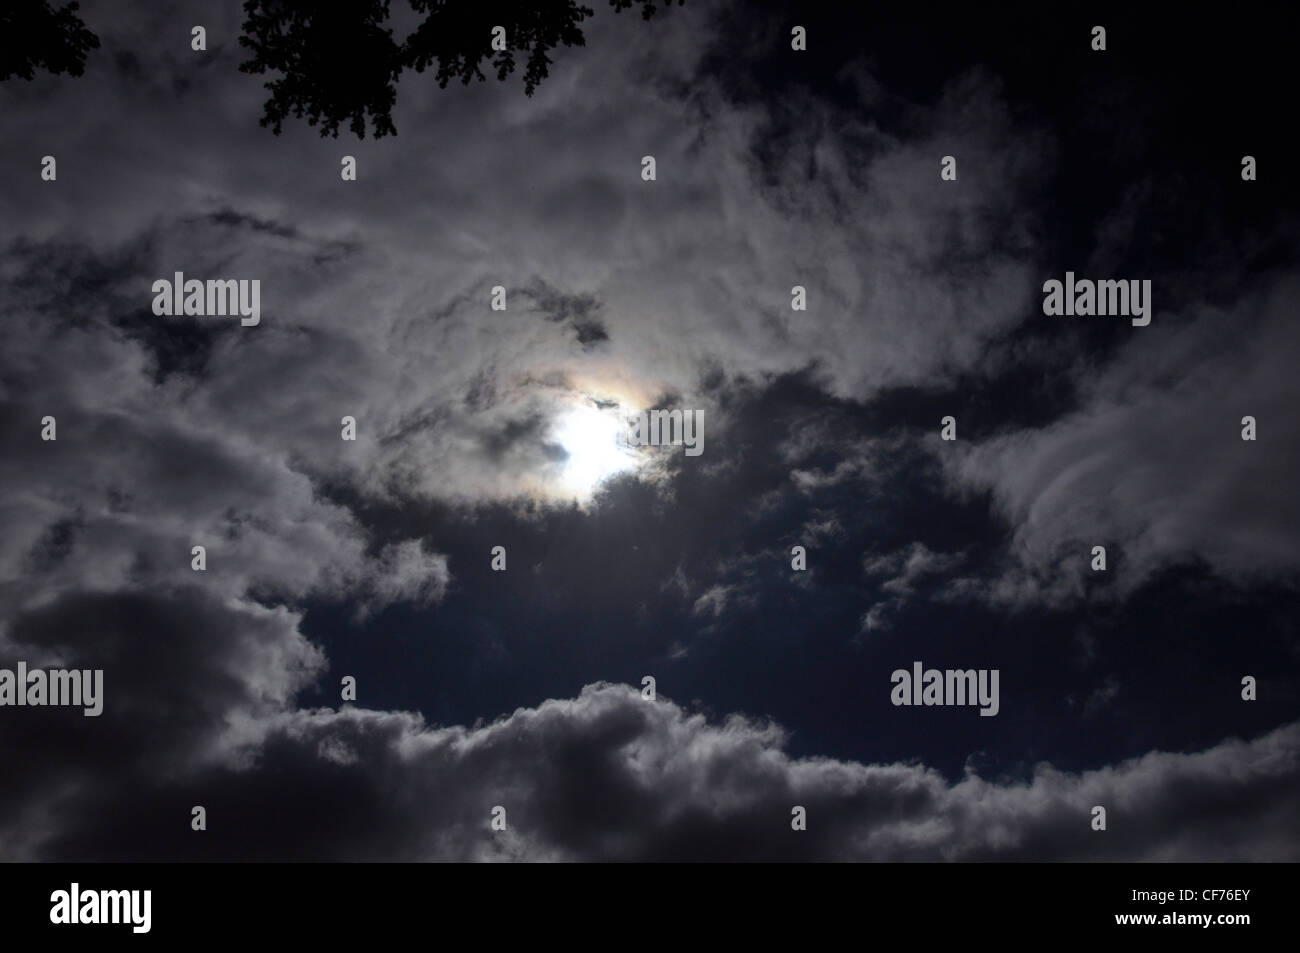 Moonlight night effect and clouds drama wonder beauty Stock Photo